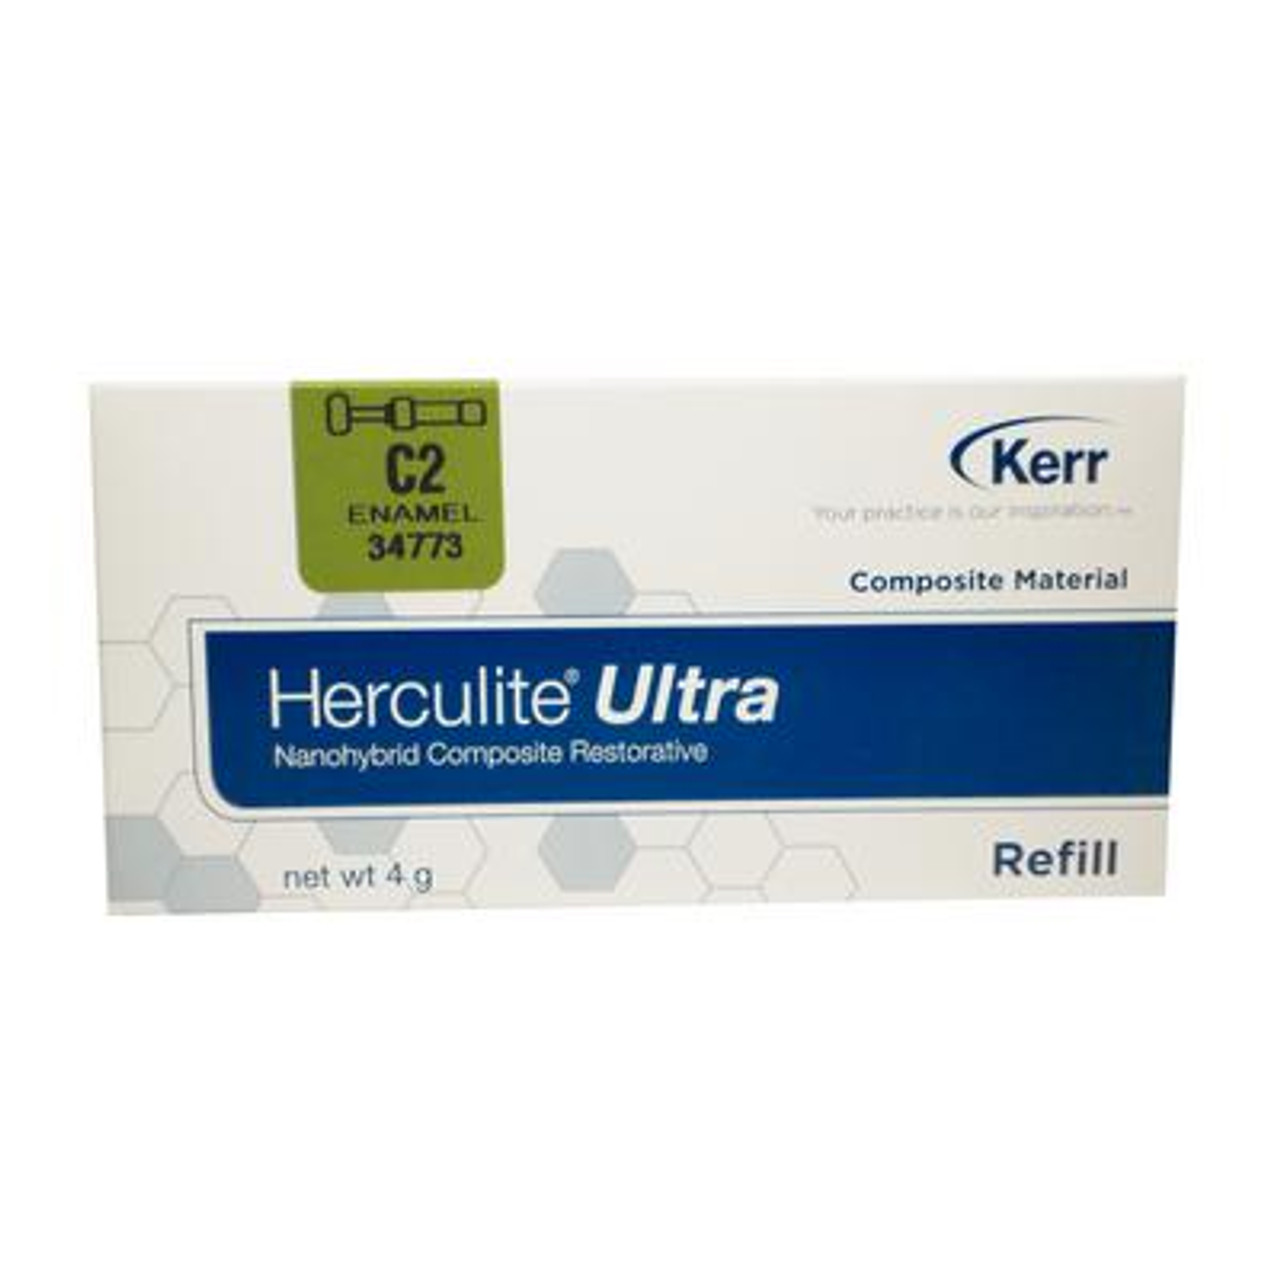 Kerr Herculite Ultra Refill C2 Enamel Syringe ea